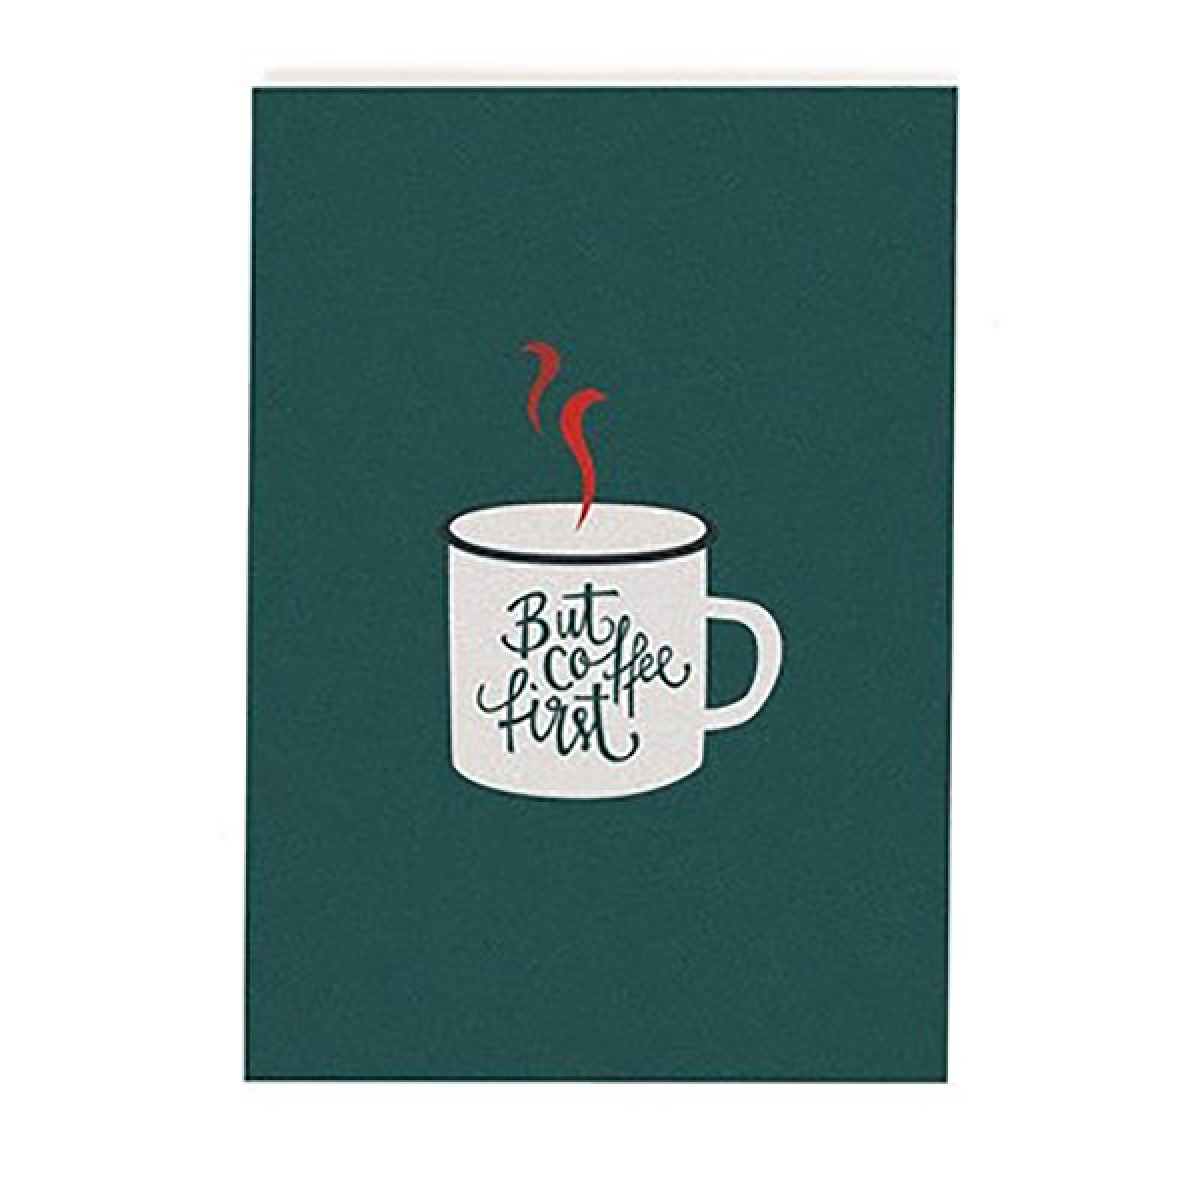 "Coffee first" Postkarte von Roadtyping